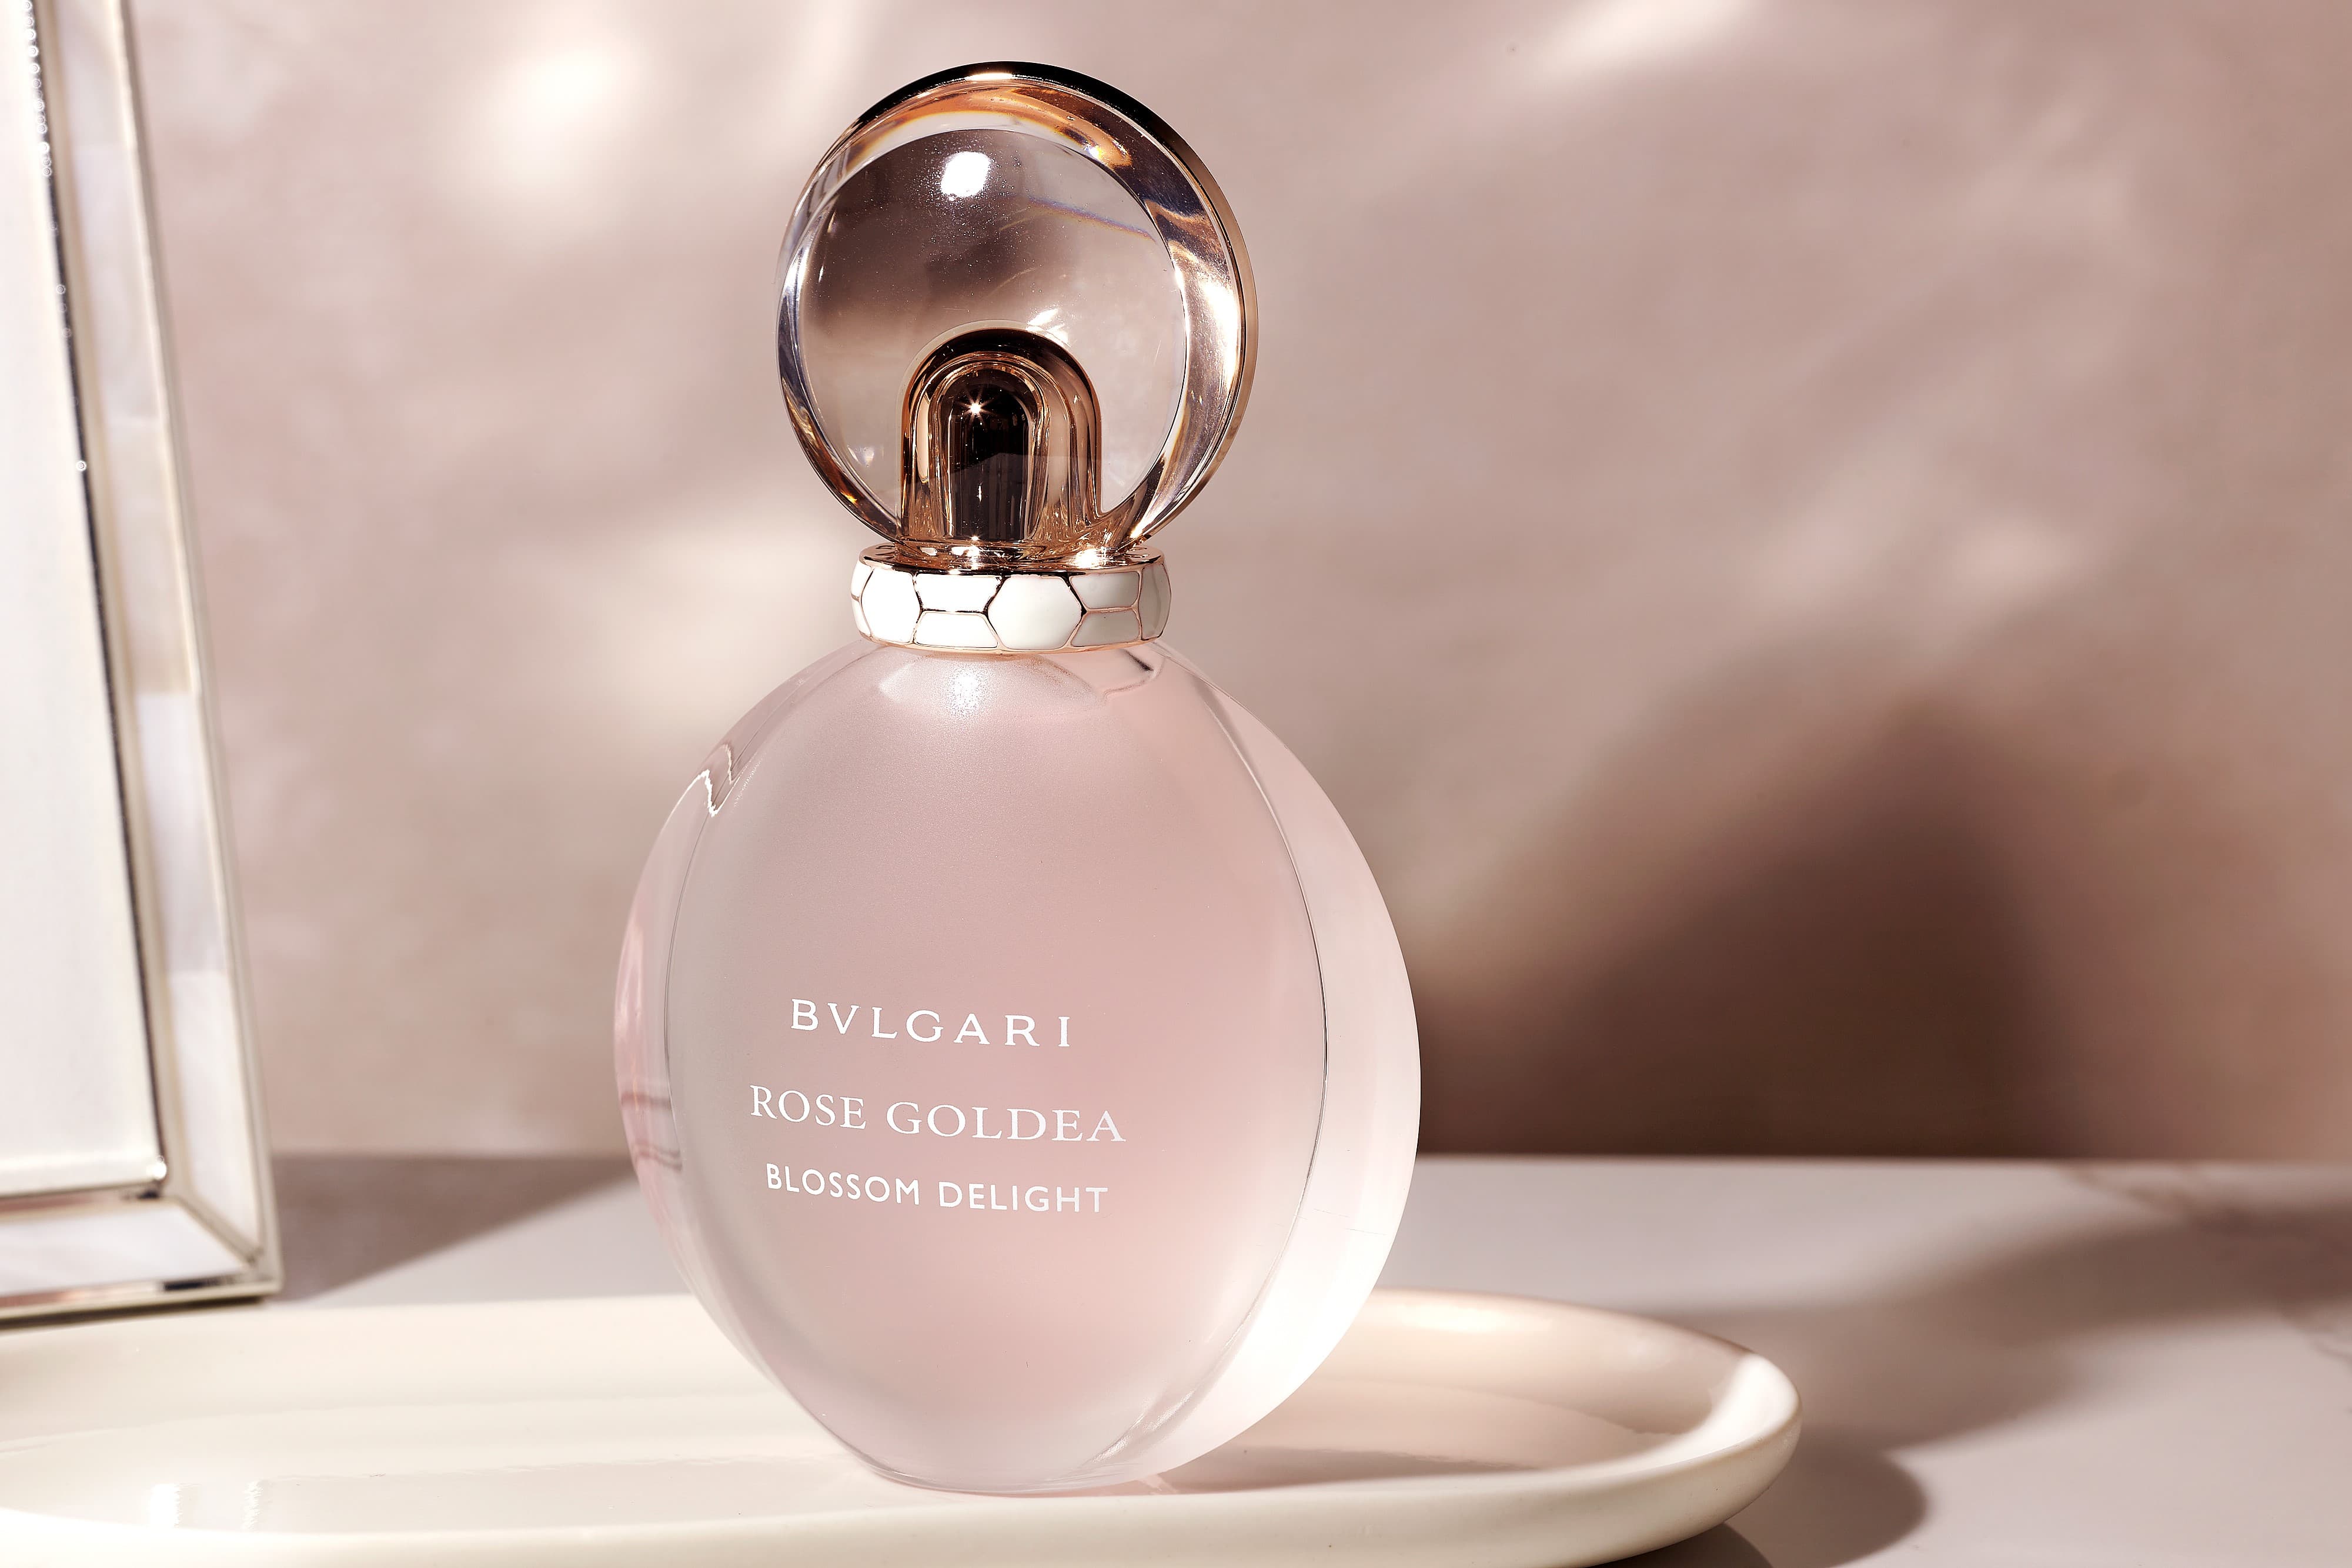 Find Your Signature Bvlgari Fragrance